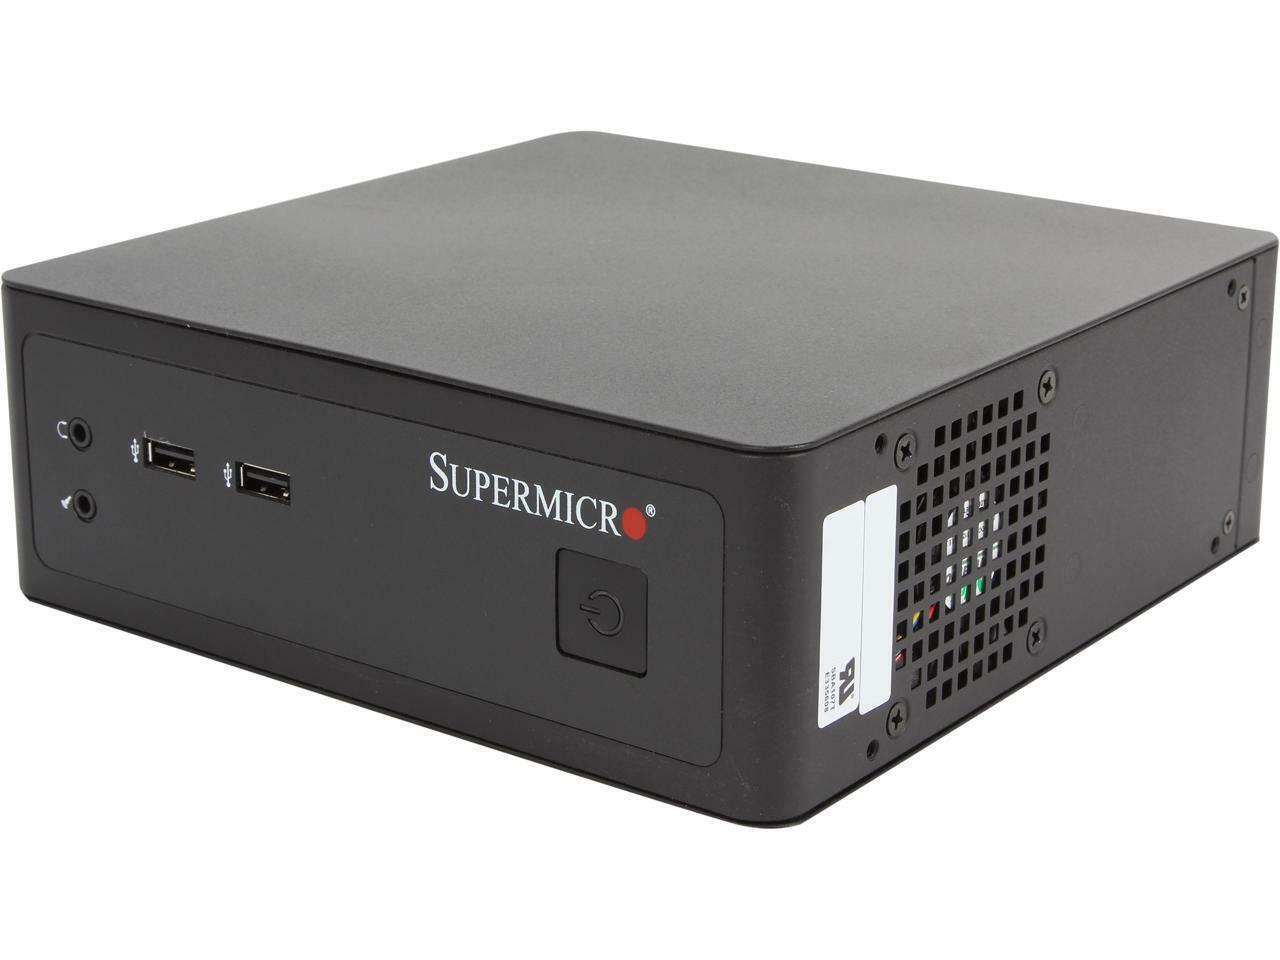 SUPERMICRO SYS-1017A-MP Mini-ITX Server Barebone FCBGA559 Intel NM10 Express Chi